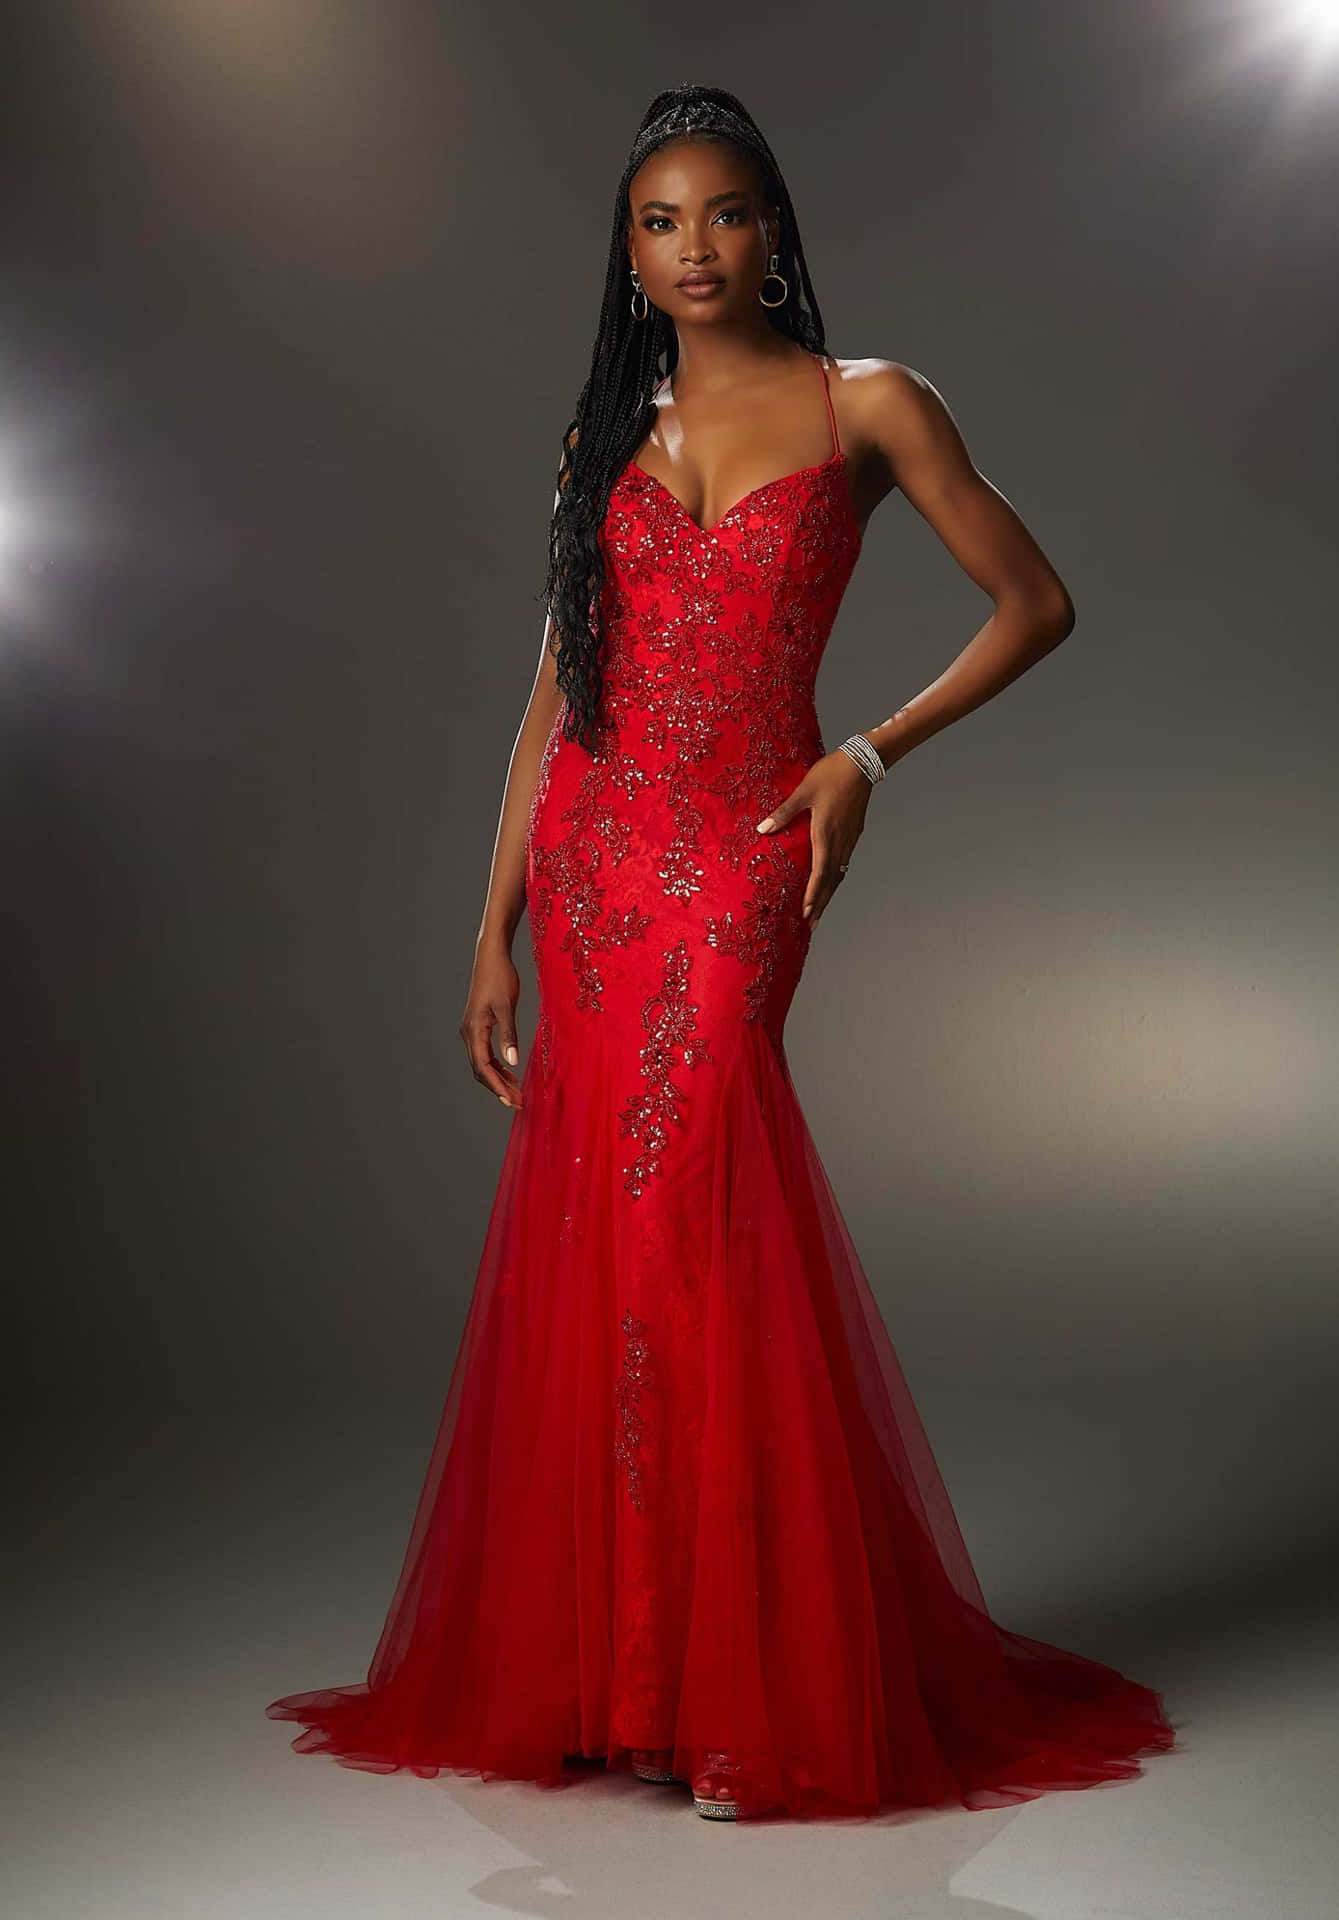 Elegant Woman in Red Lace Dress Wallpaper